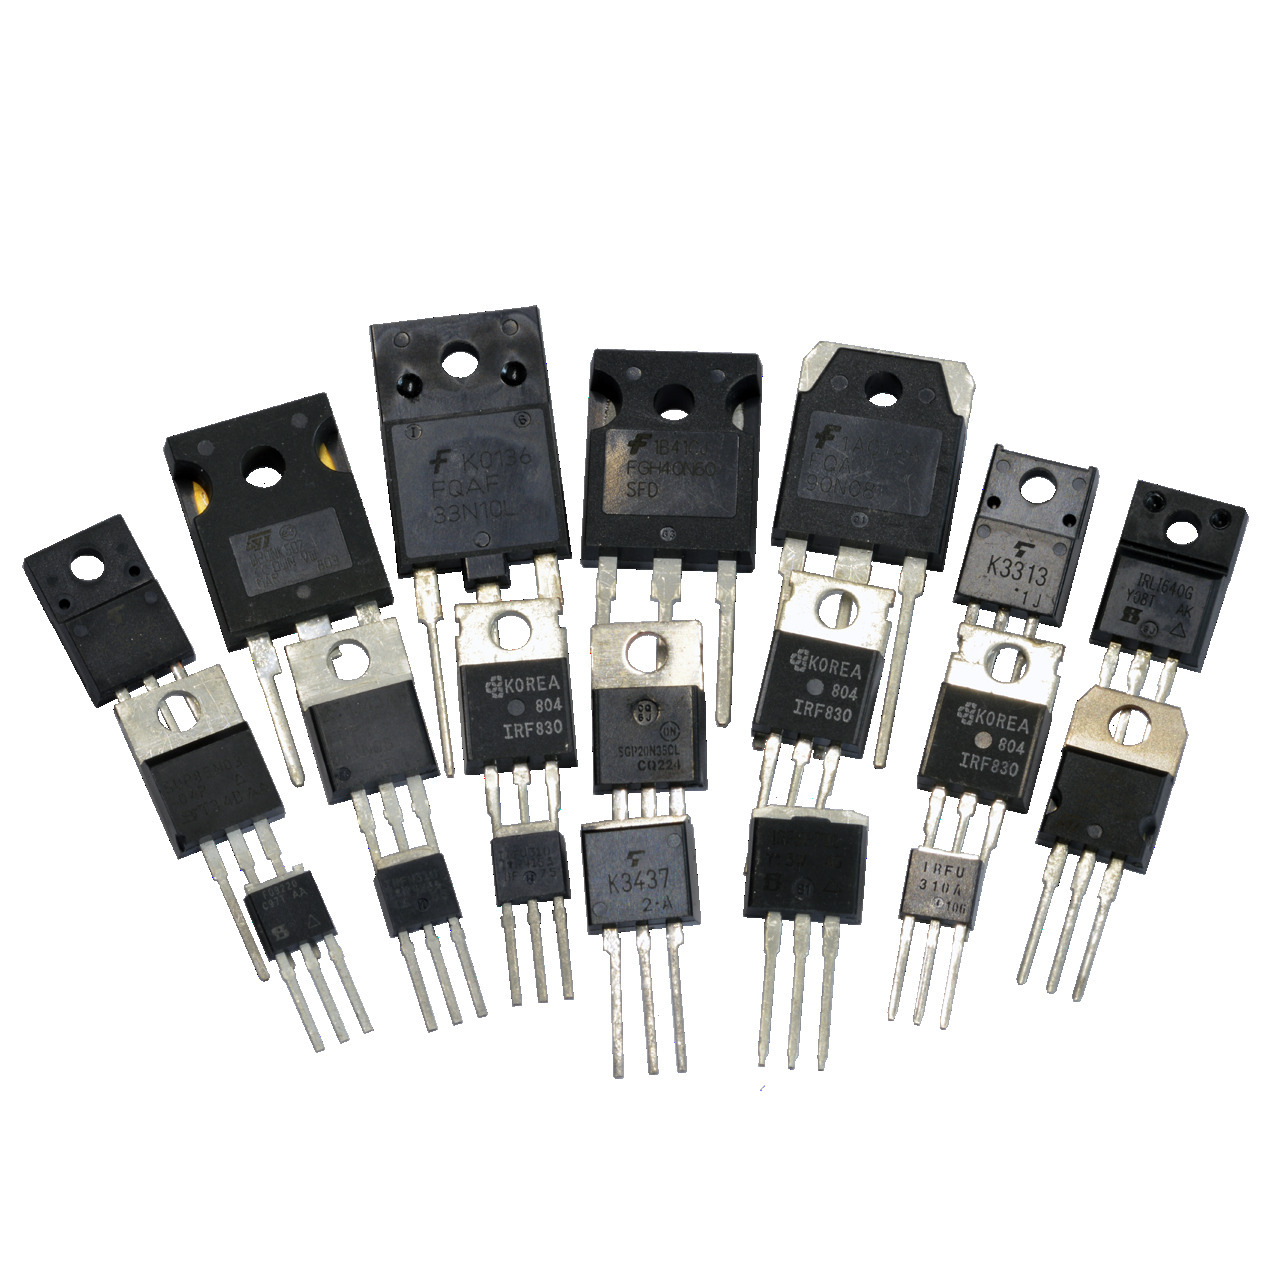 Kemo Power MOSFET und IGBT Transistoren-Sortiment S106- ca- 20 Stck unter Komponenten